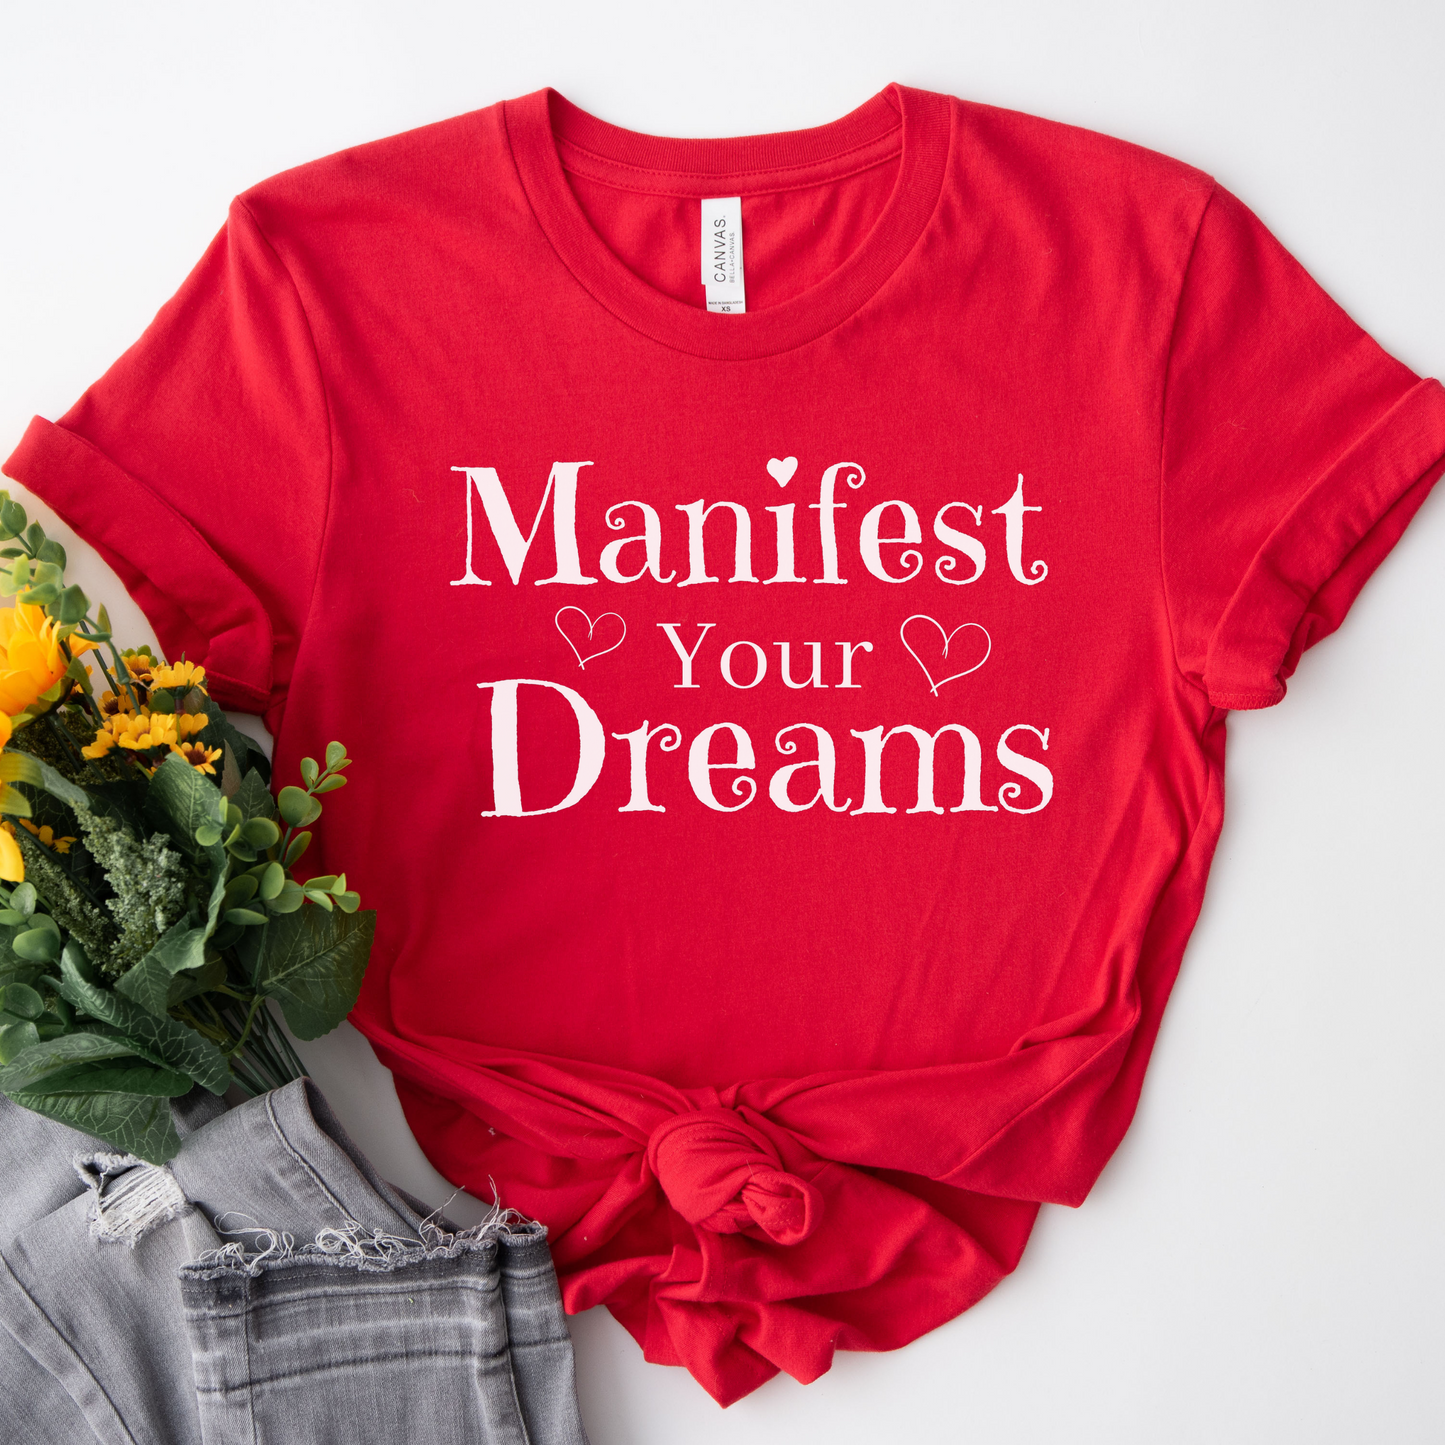 Manifest your dreams inspirational T-shirt,  motivational shirt, minimalist shirt, graphic tee for women, empowerment tshirt, positive tee